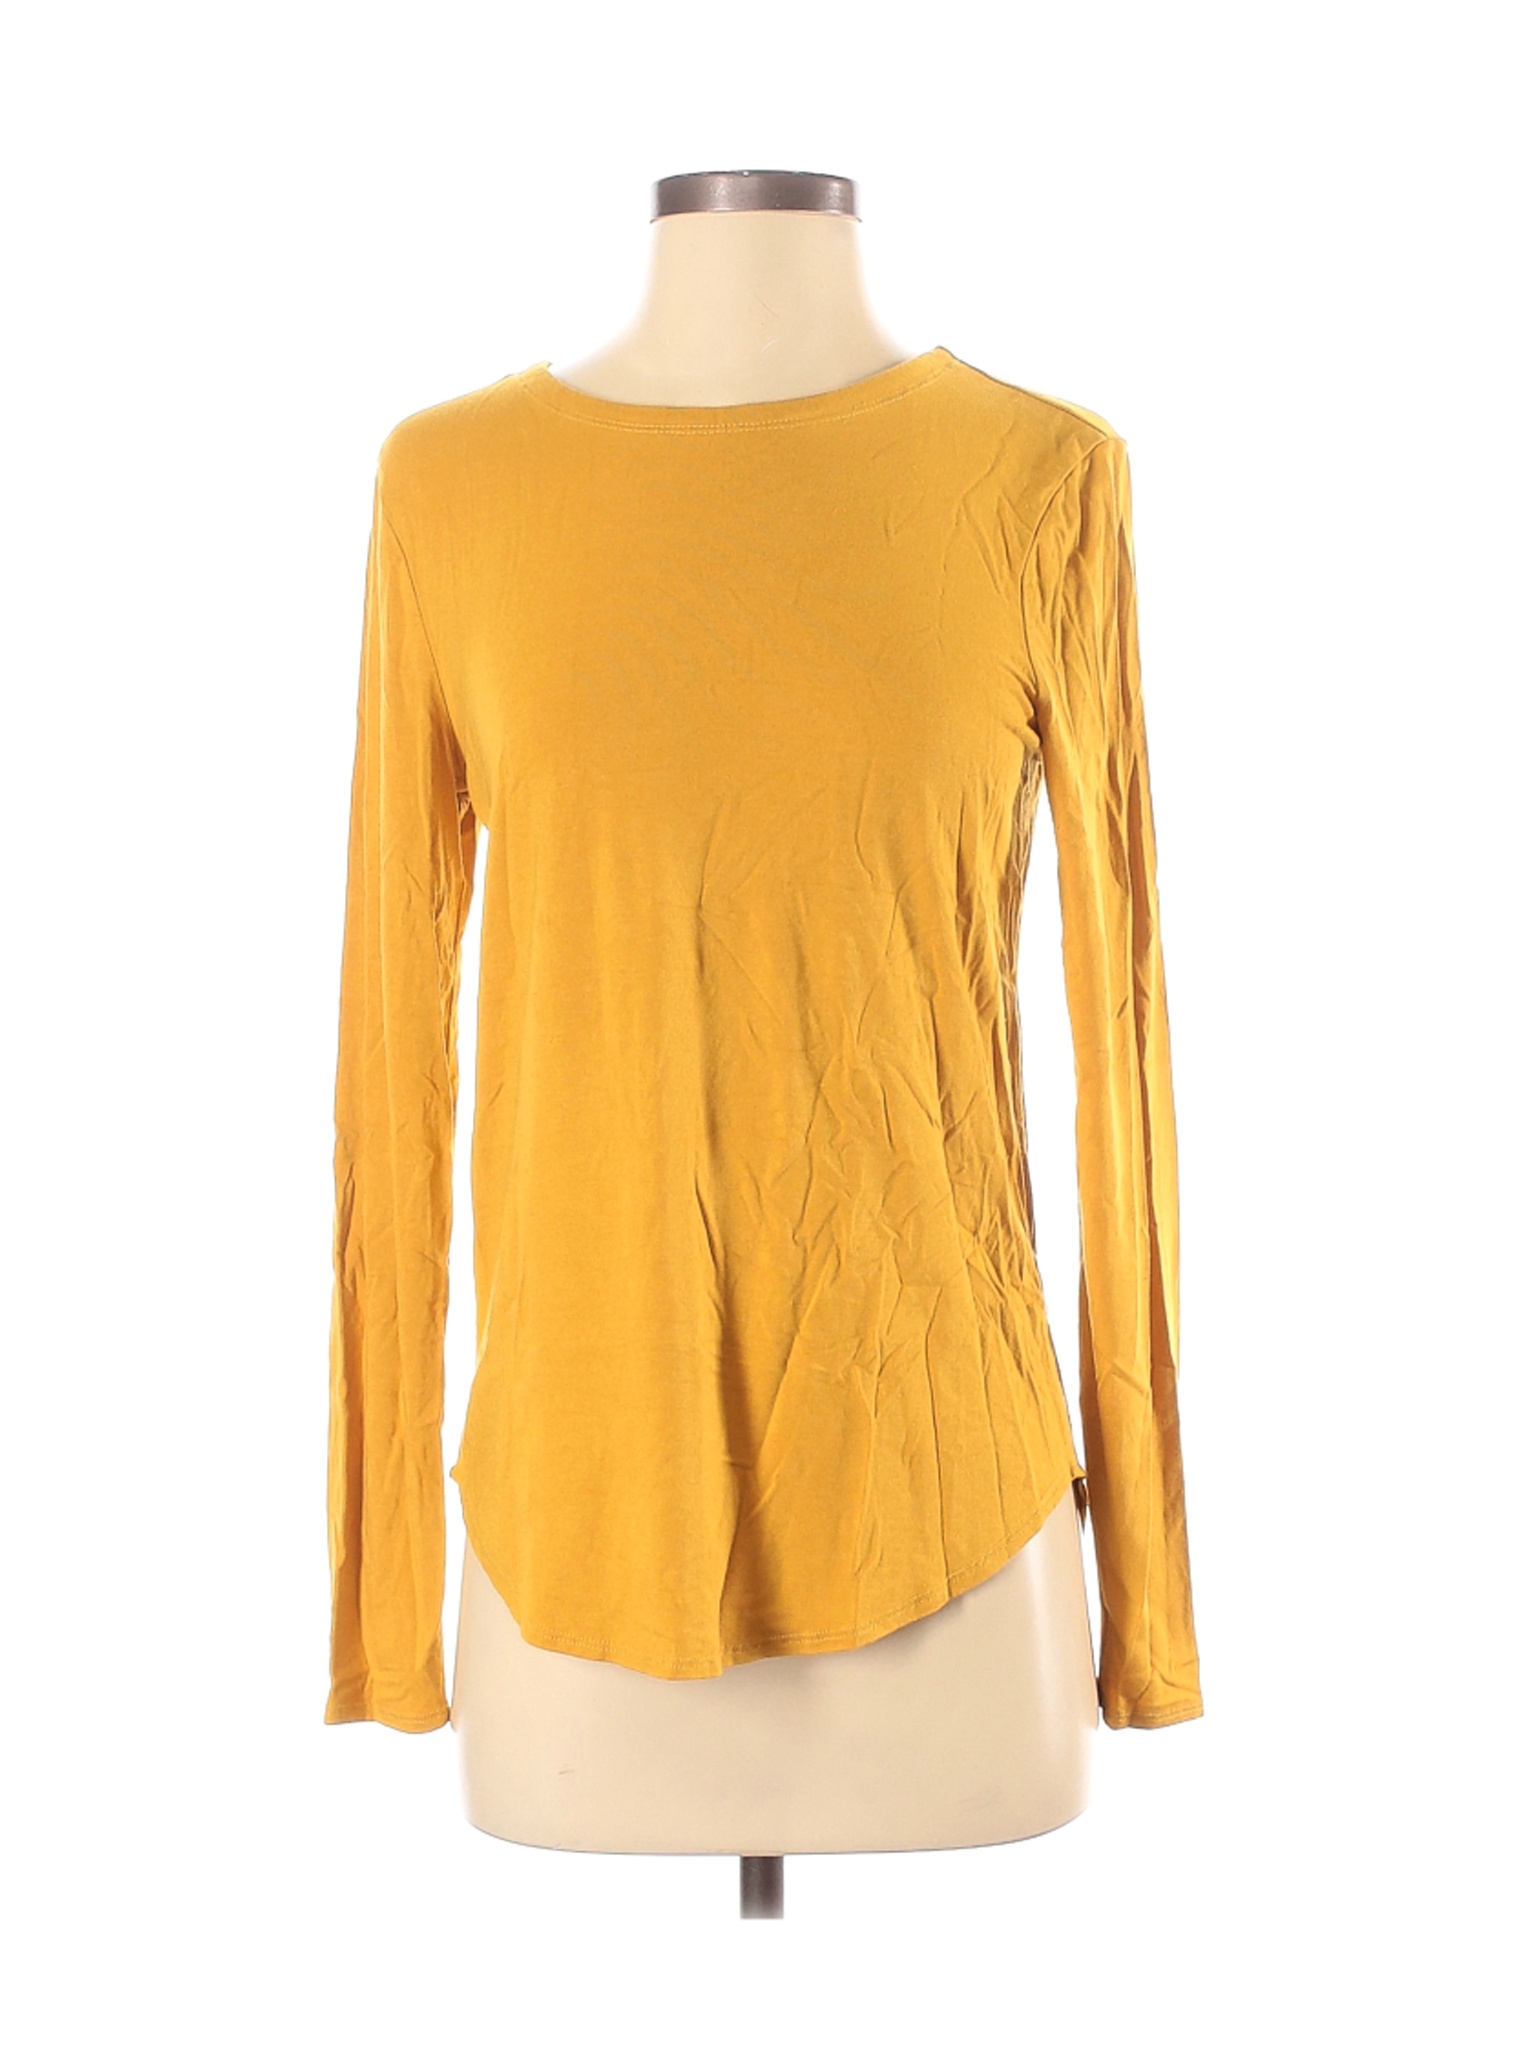 Cupio Women Yellow Long Sleeve T-Shirt S | eBay